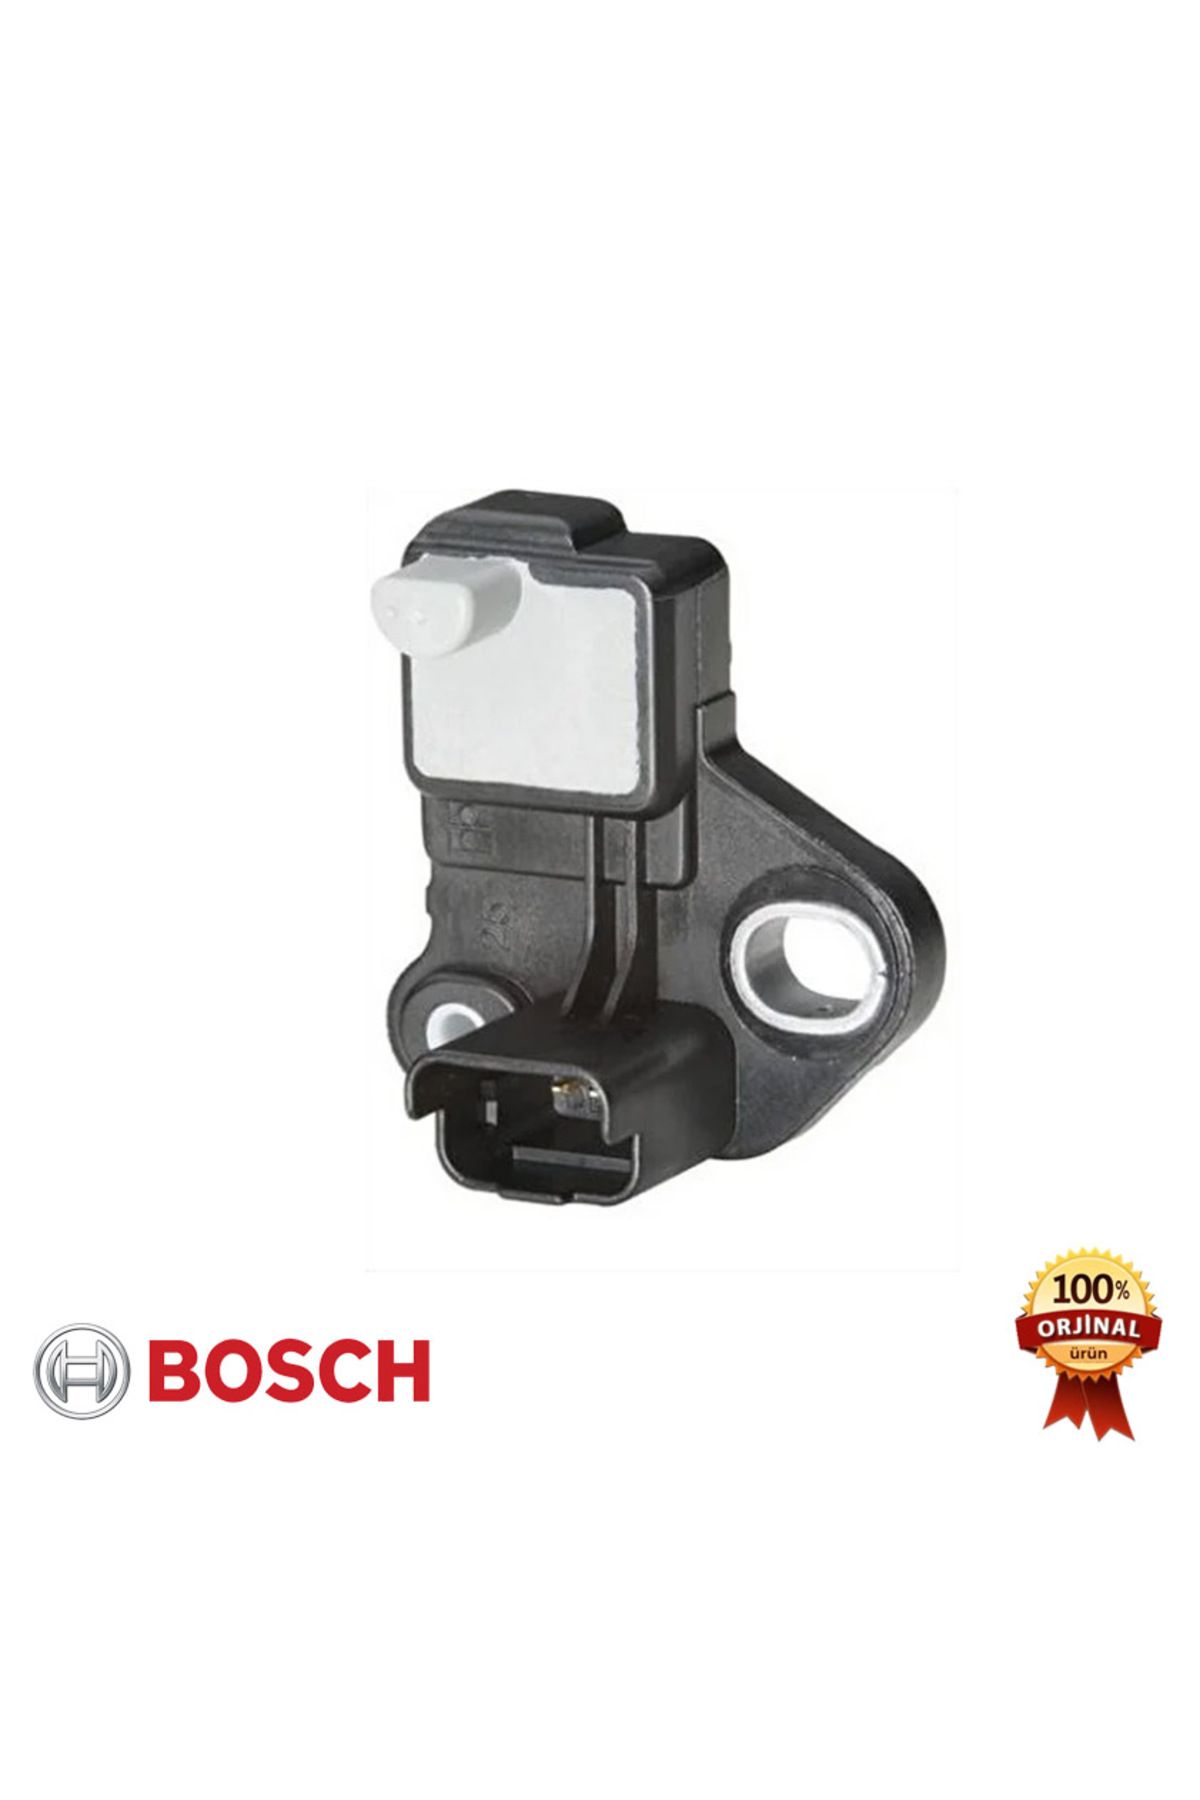 Bosch PEUGEOT 208 - Motor Devir Sensörü / Krank Sensörü - (2012~2017) - (1920PW)